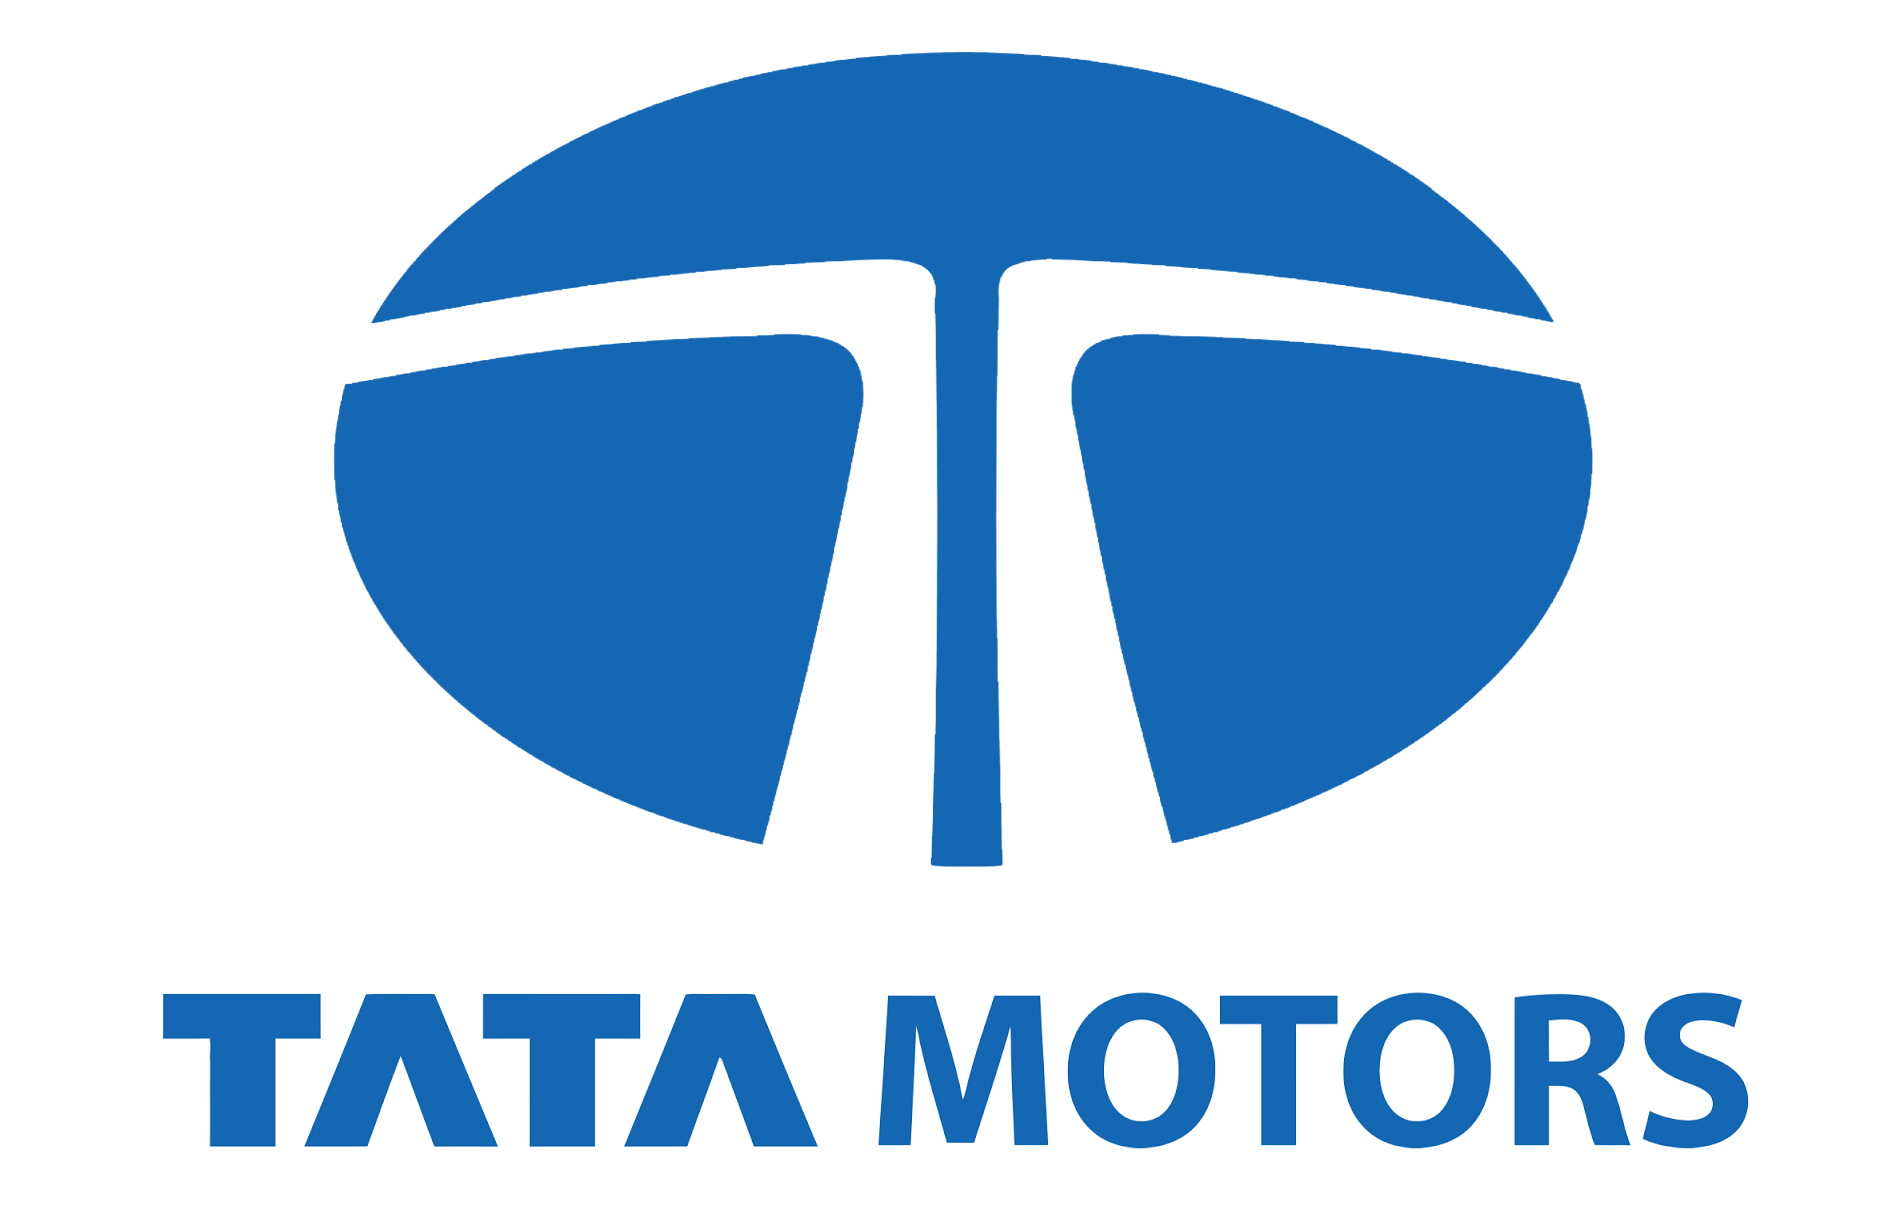 Tata Motors Cars Showroom - Adishakti Cars|Repair Services|Automotive